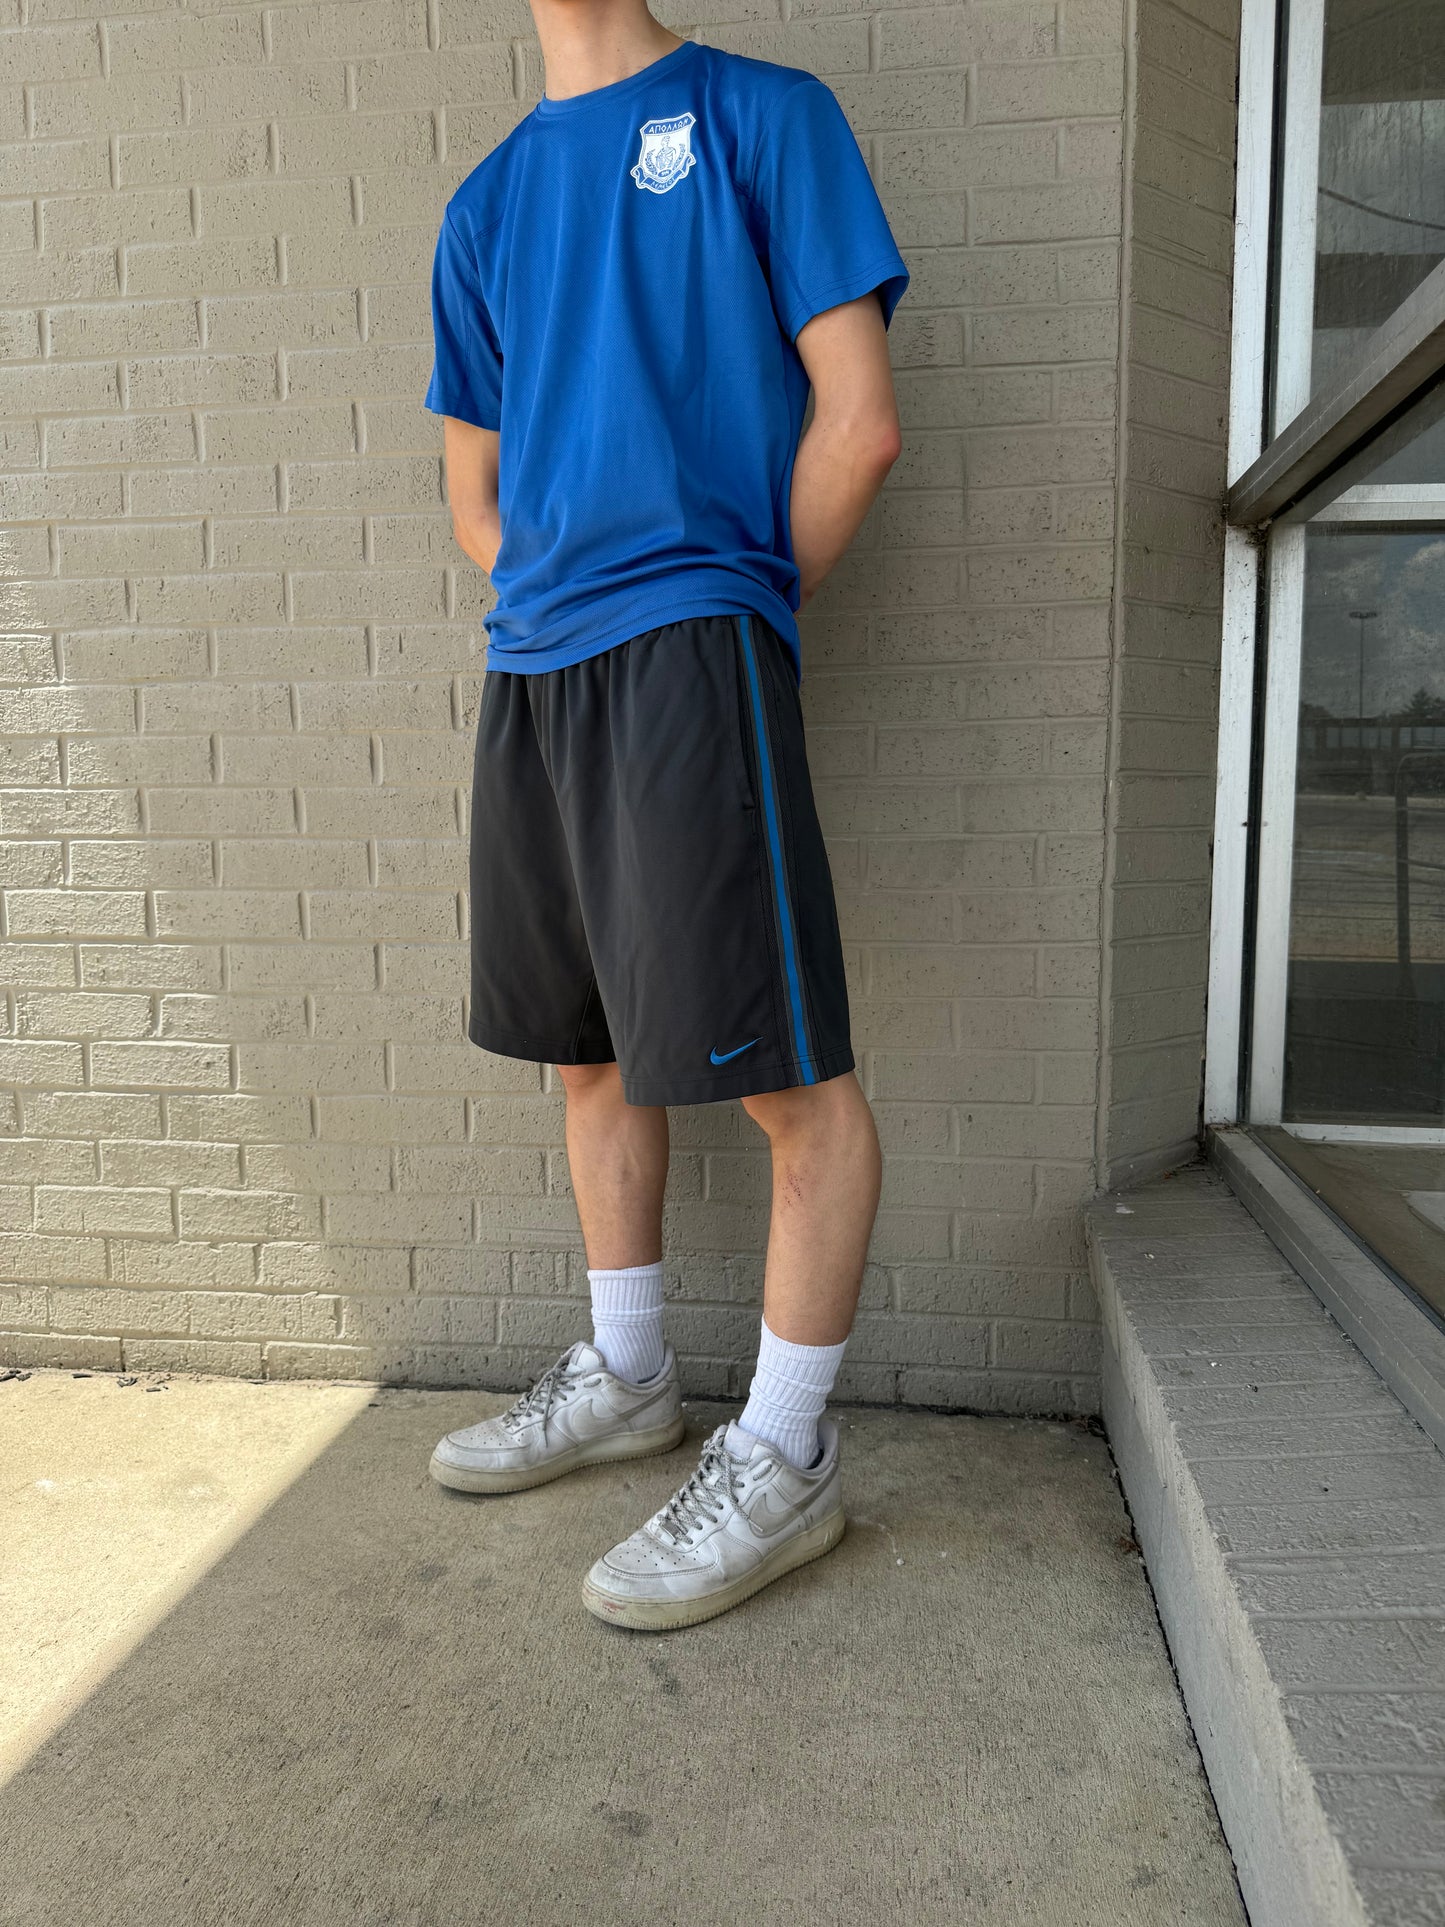 Blue & Gray Nike Shorts